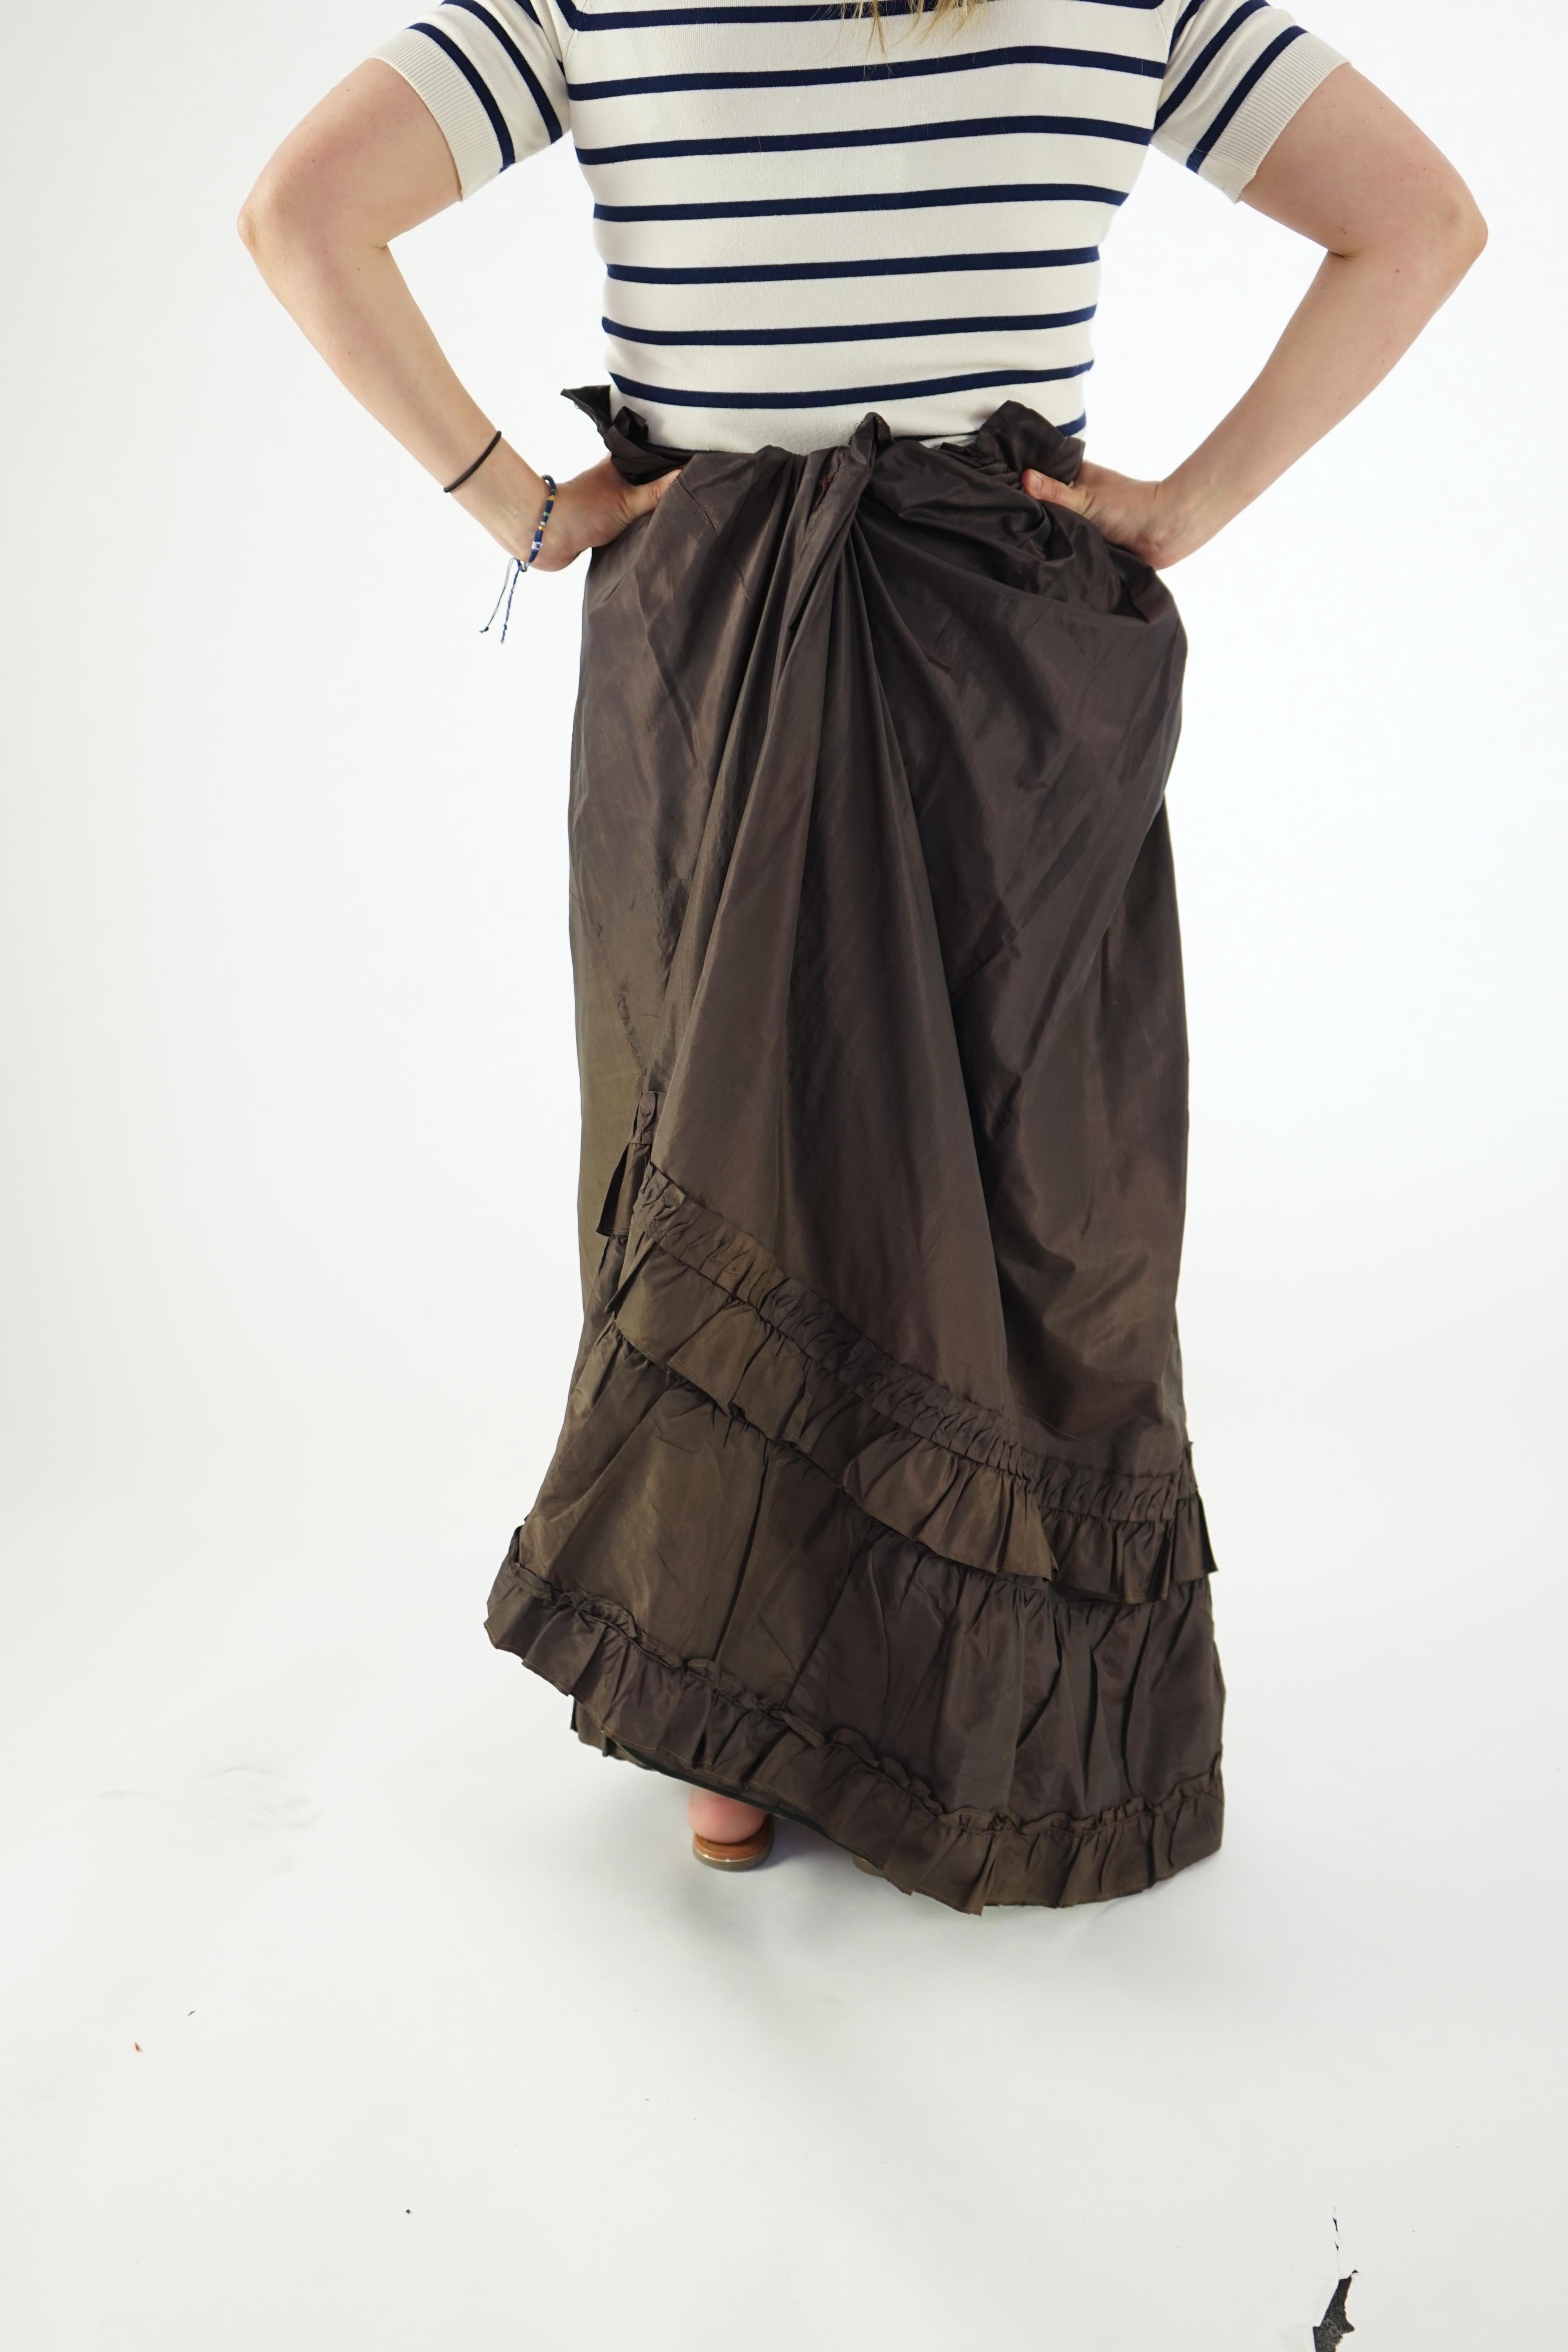 A lady's dark brown (original 19th century) skirt with decorative work.